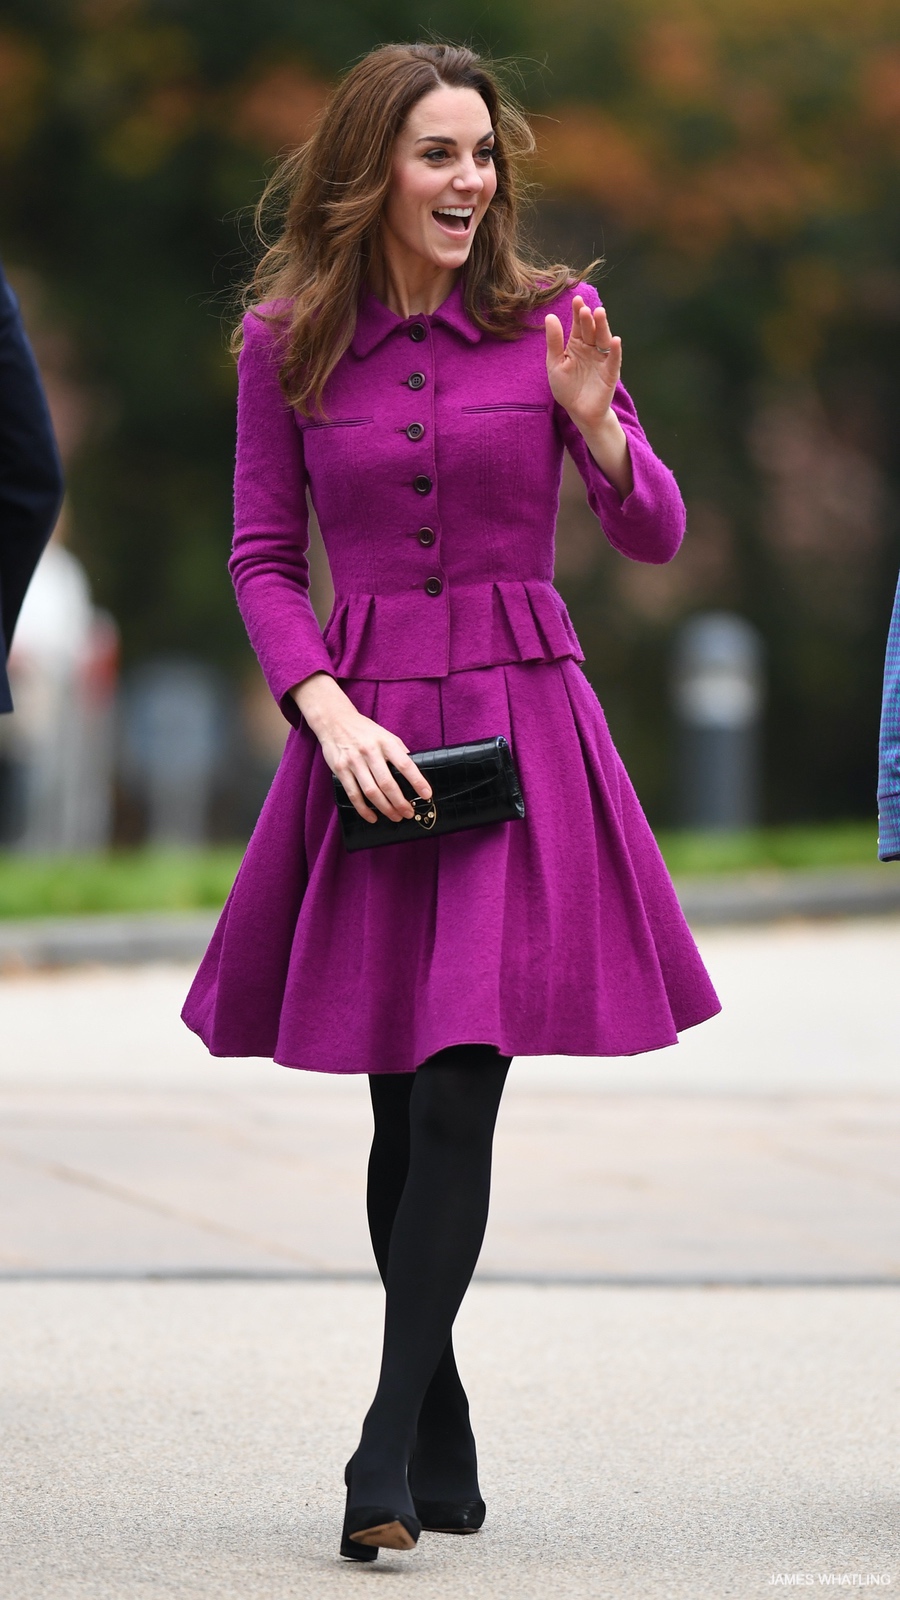 Kate Middleton embraces dopamine dressing in this bright purple skirt suit by Oscar de la Renta